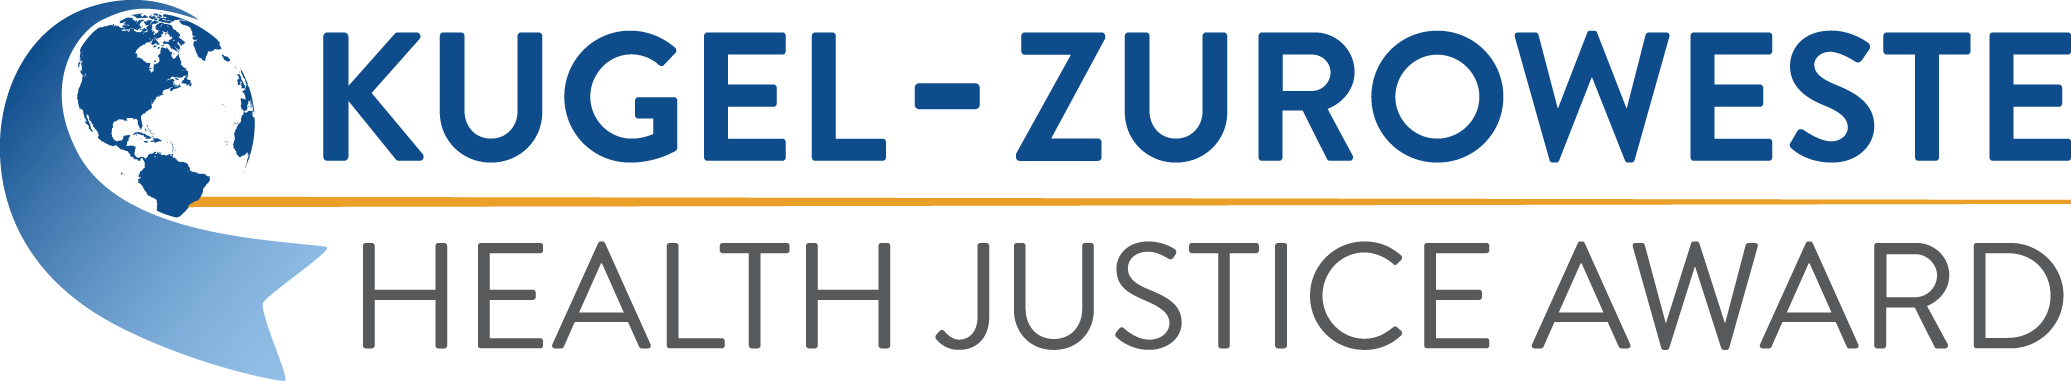 Kugel-Zuroweste Award Logo